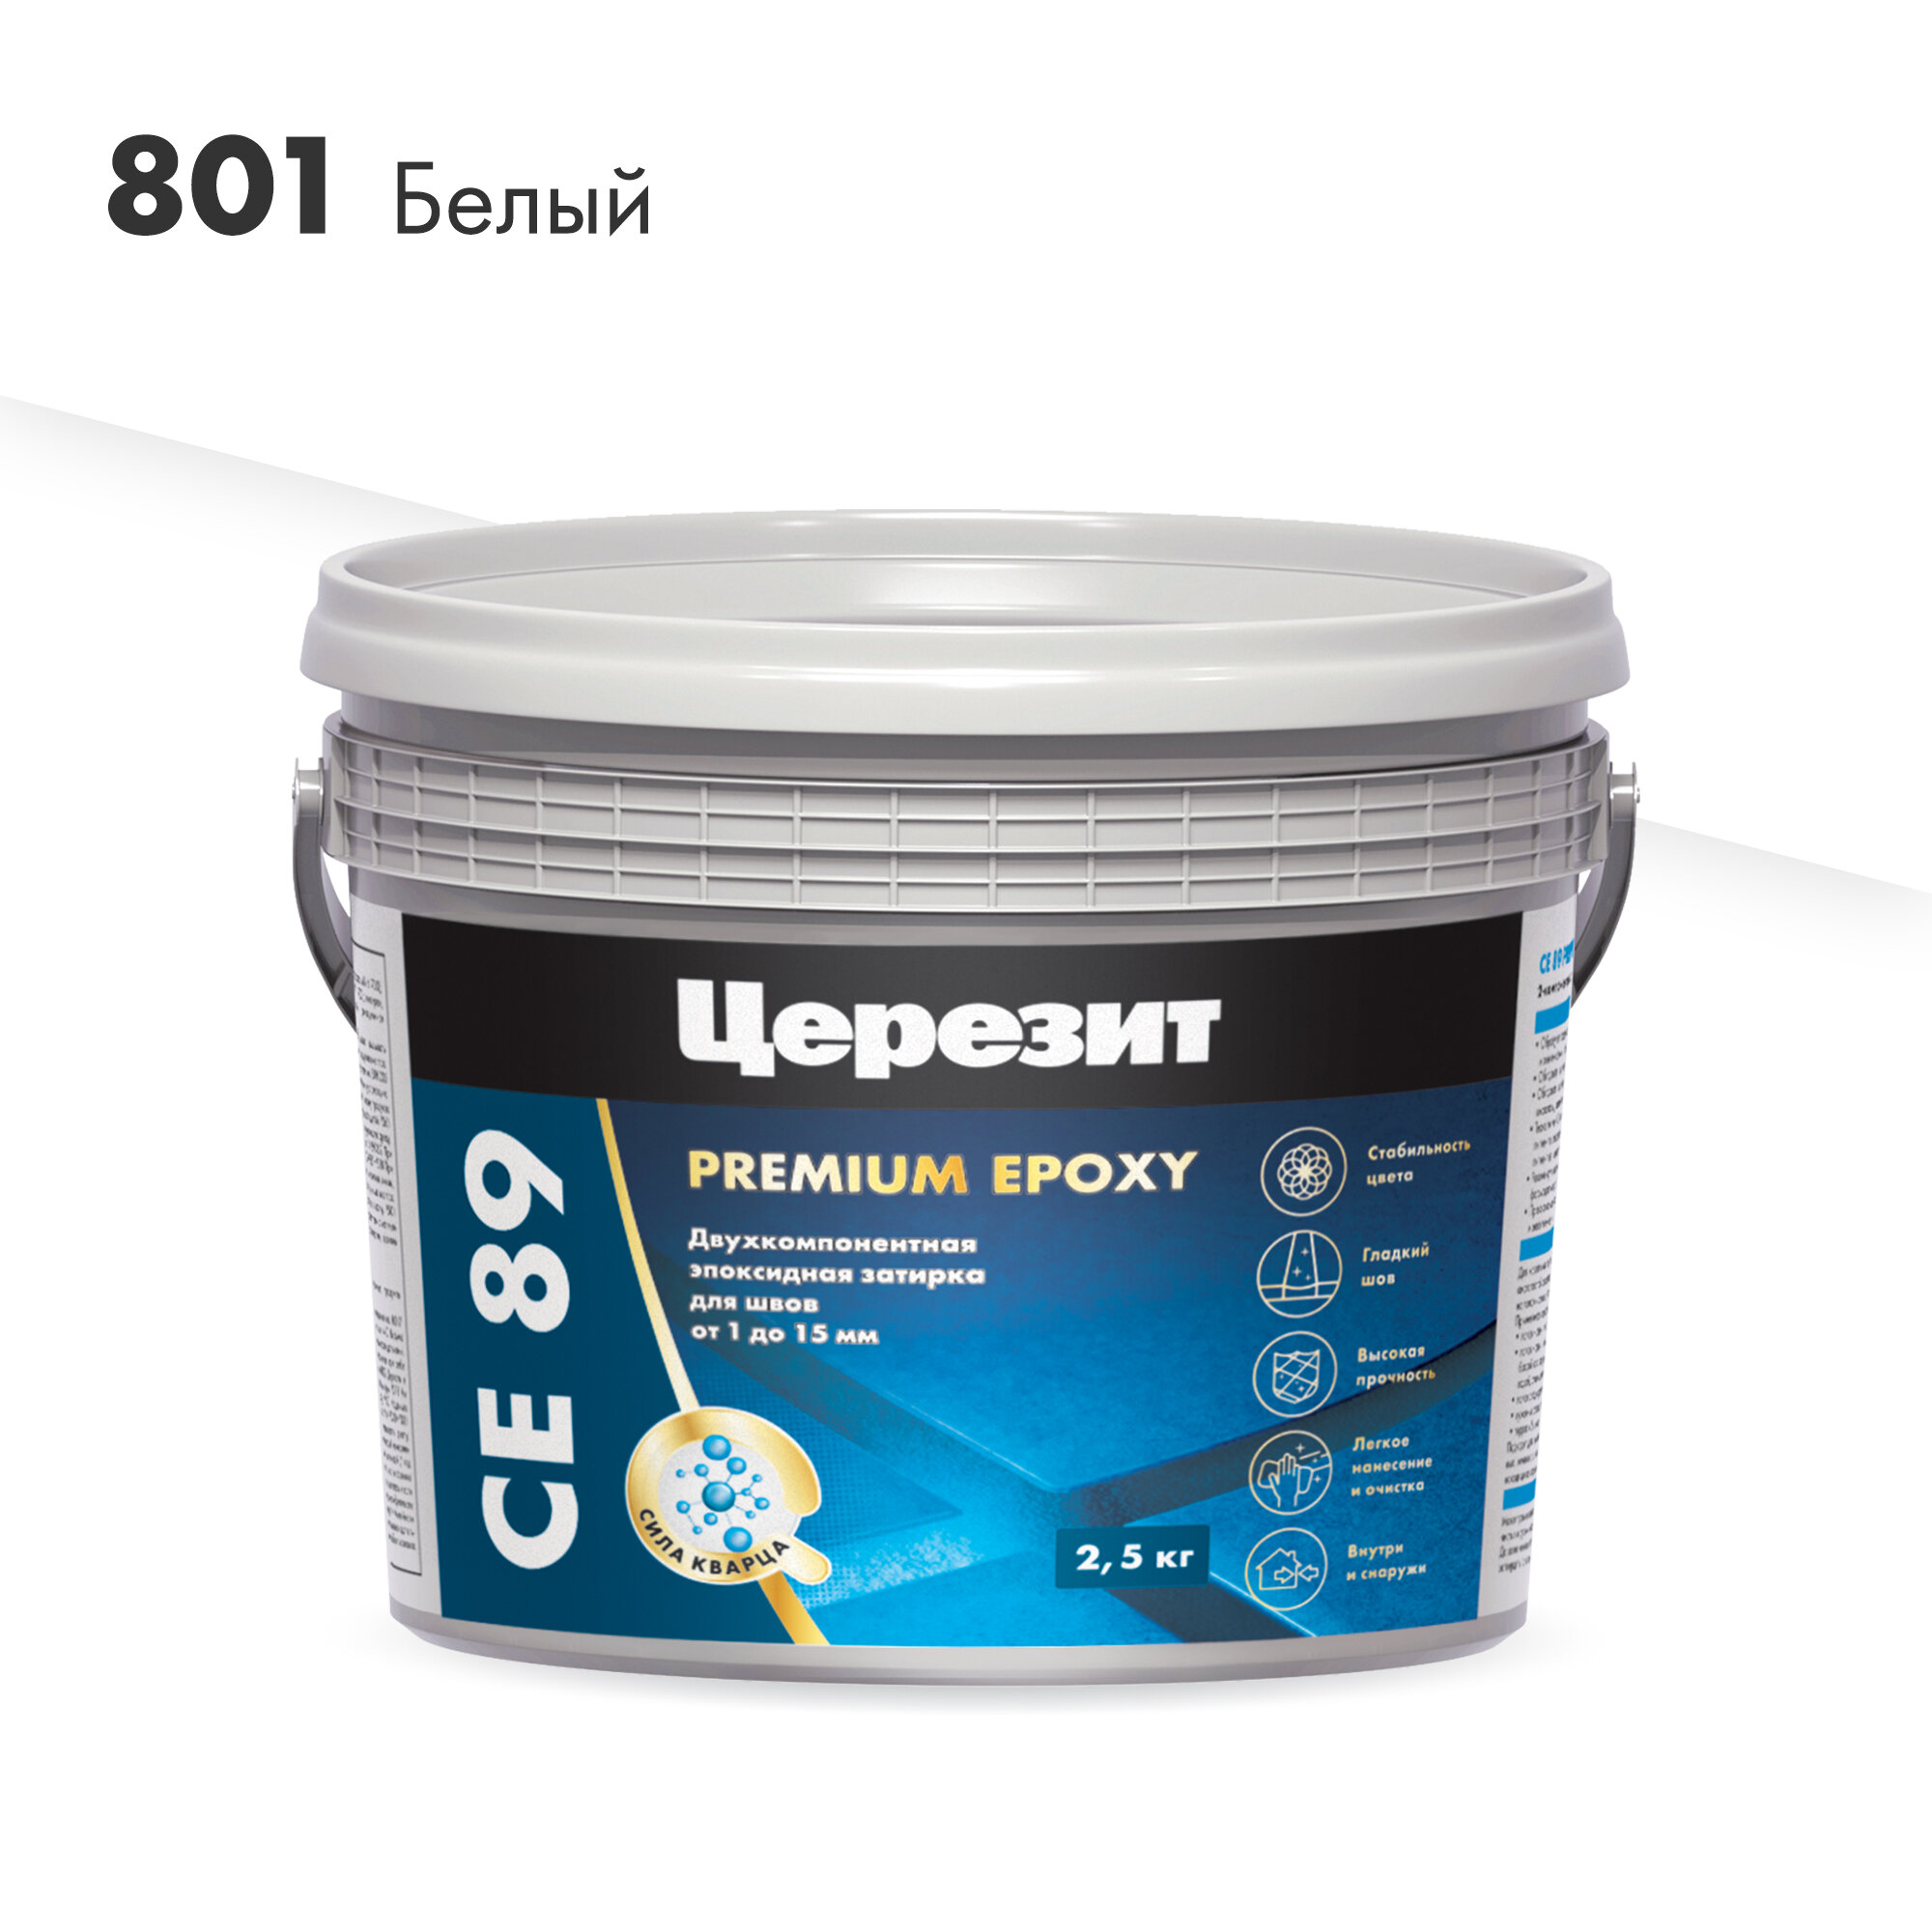 Затирка эпоксидная церезит CE89 PREMIUM EPOXY белый №801 (2,5кг)